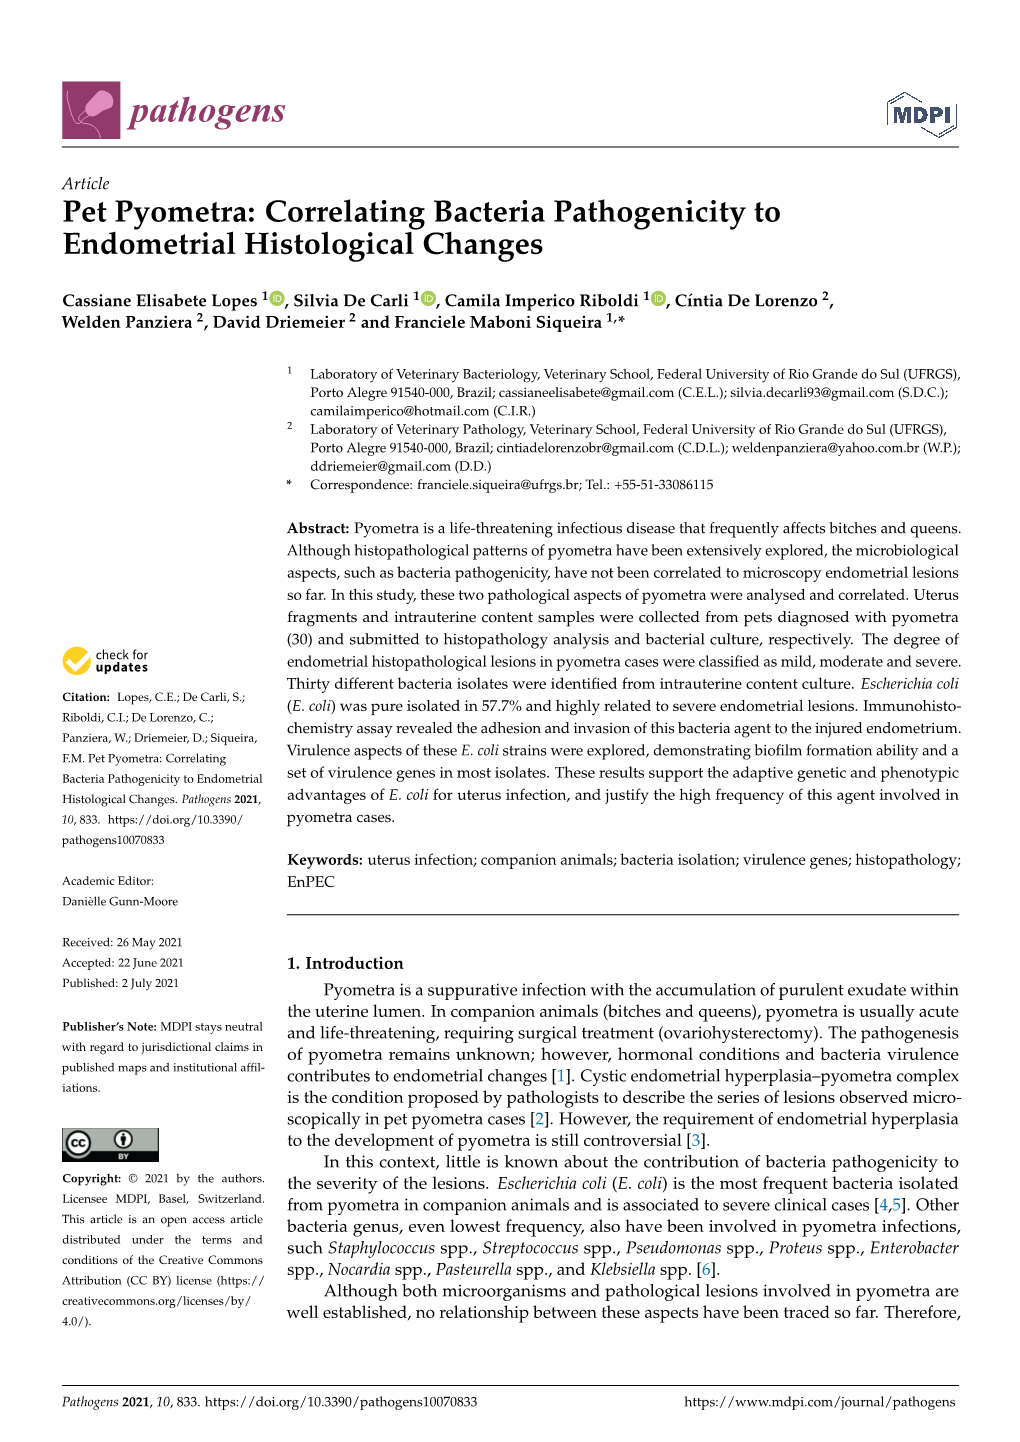 Pet Pyometra: Correlating Bacteria Pathogenicity to Endometrial Histological Changes